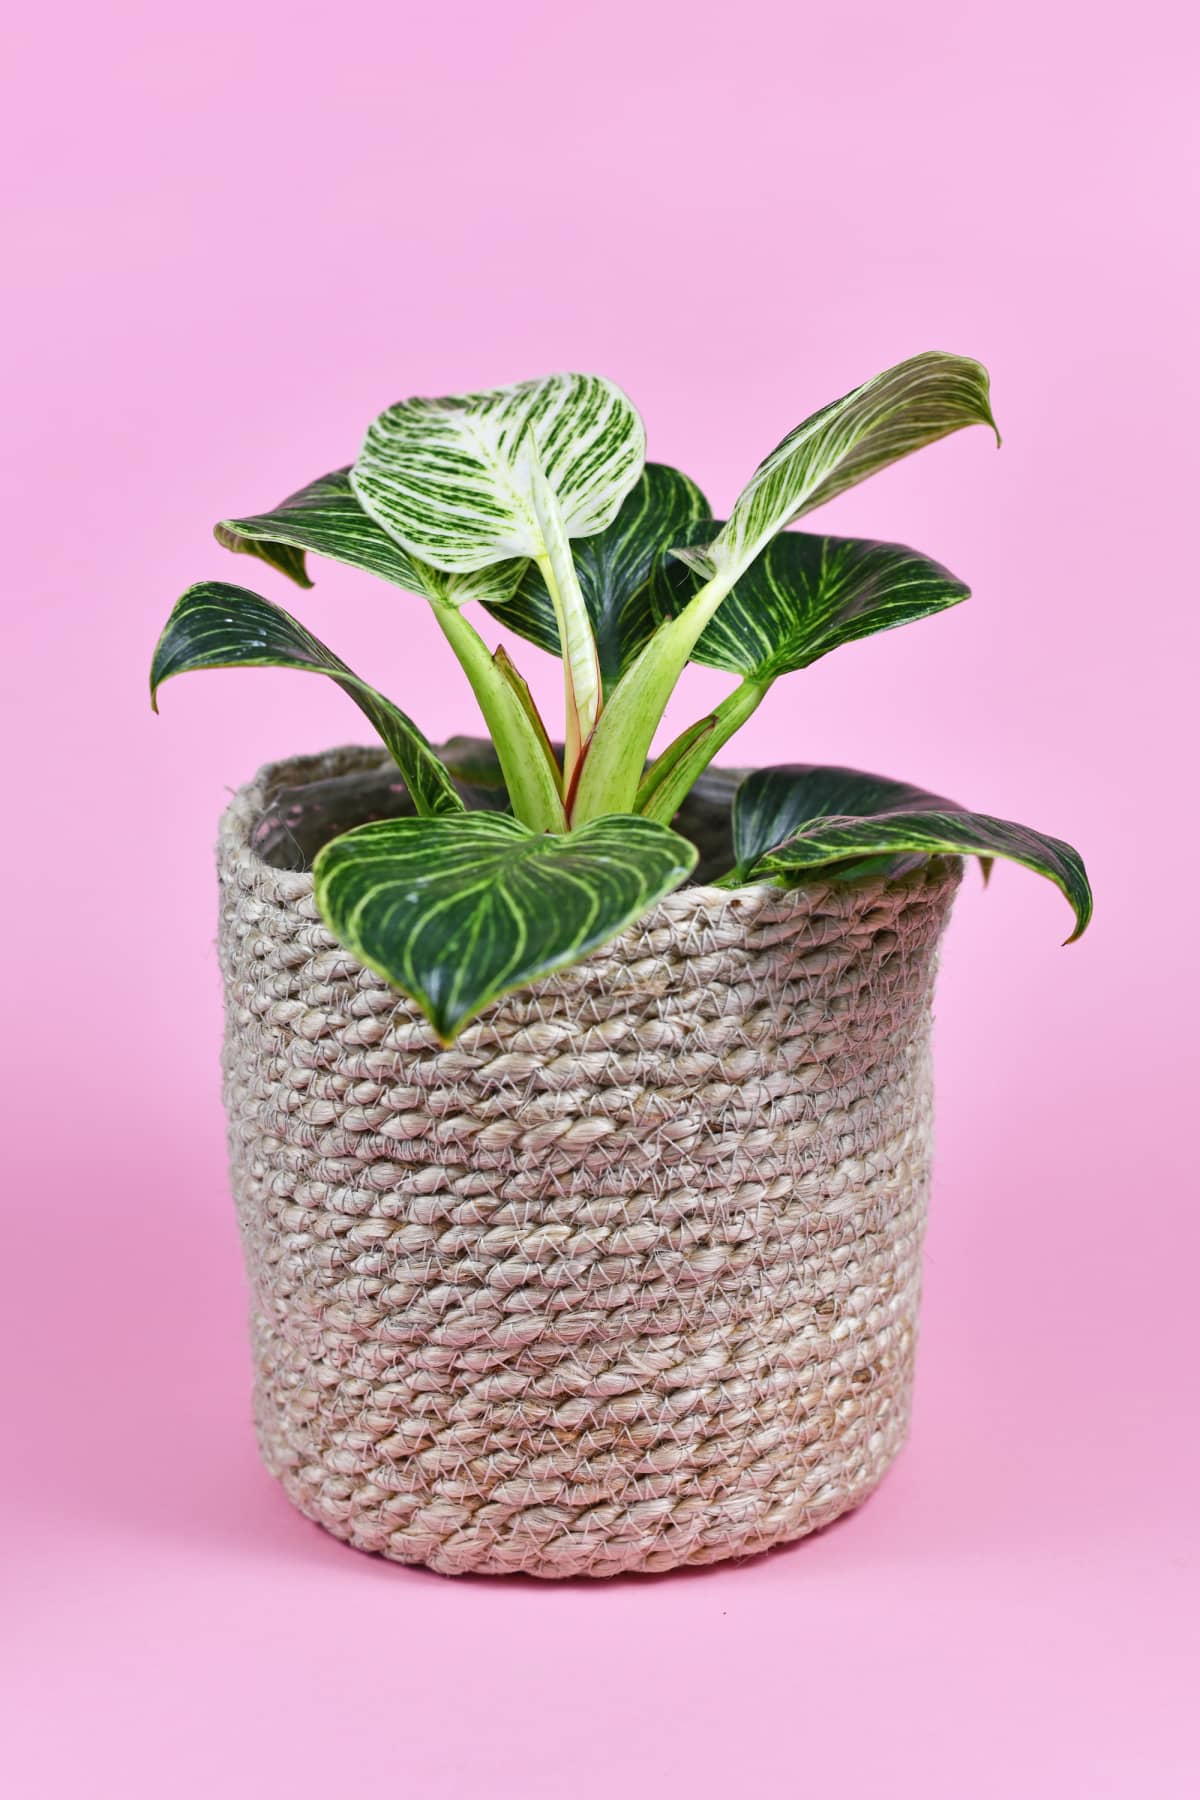 Houseplant Philo birkins in a pot